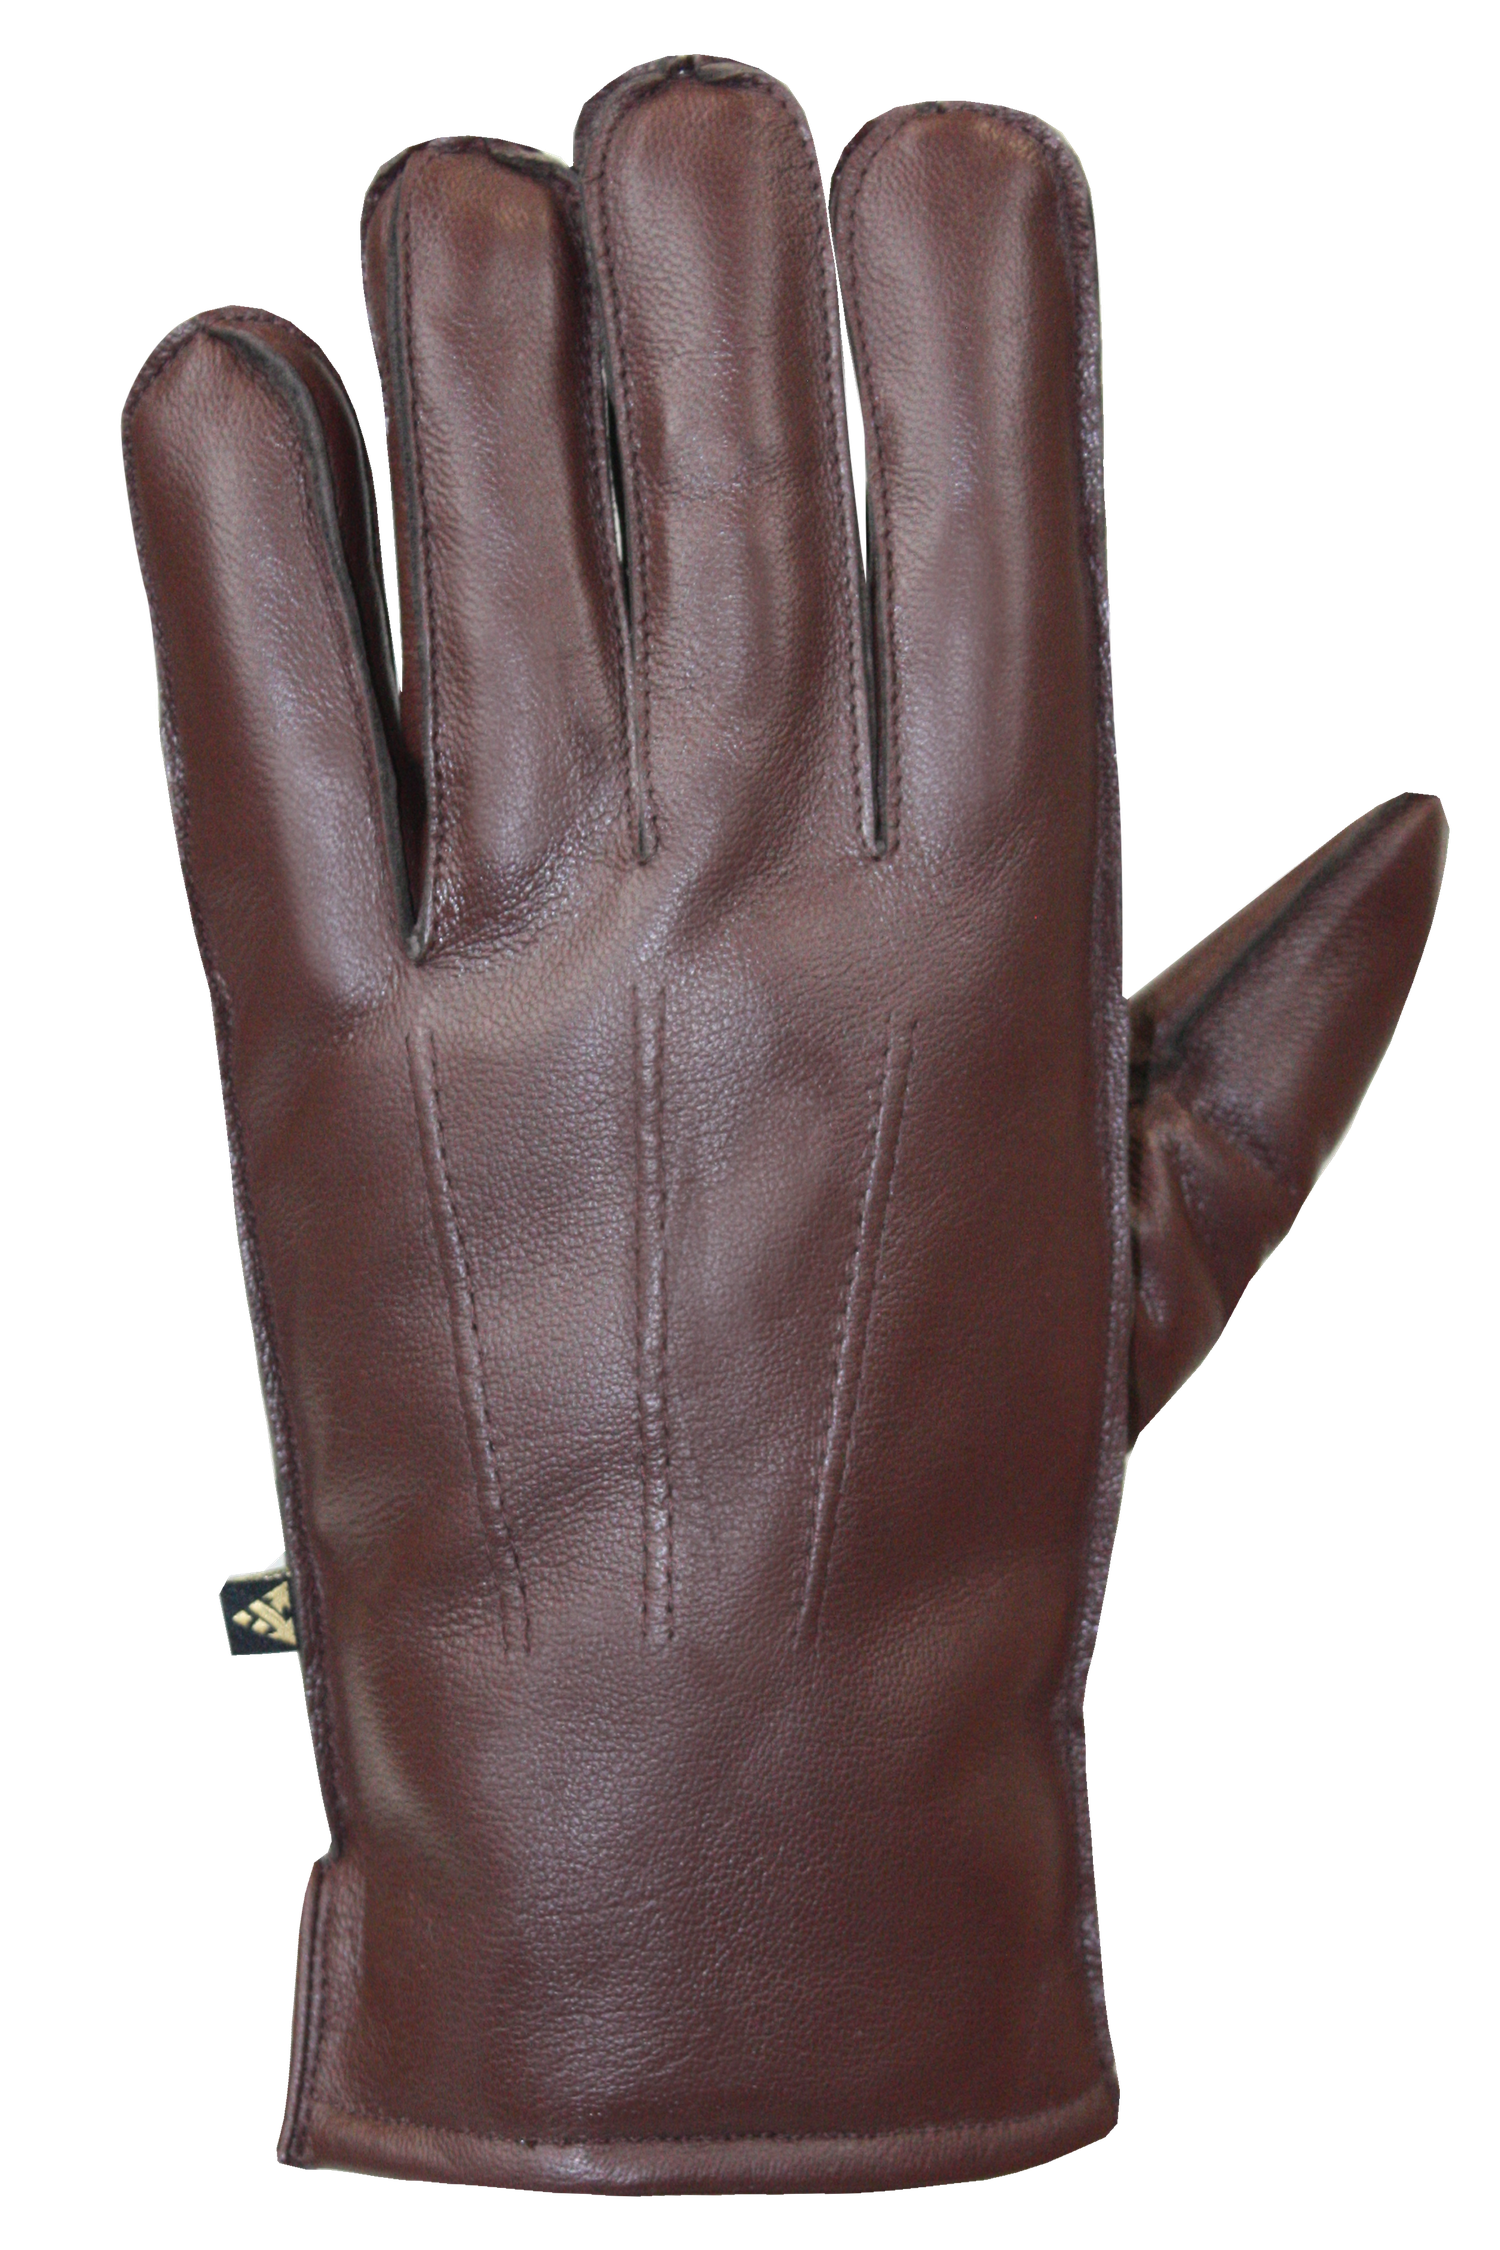 Brody Gloves - Men